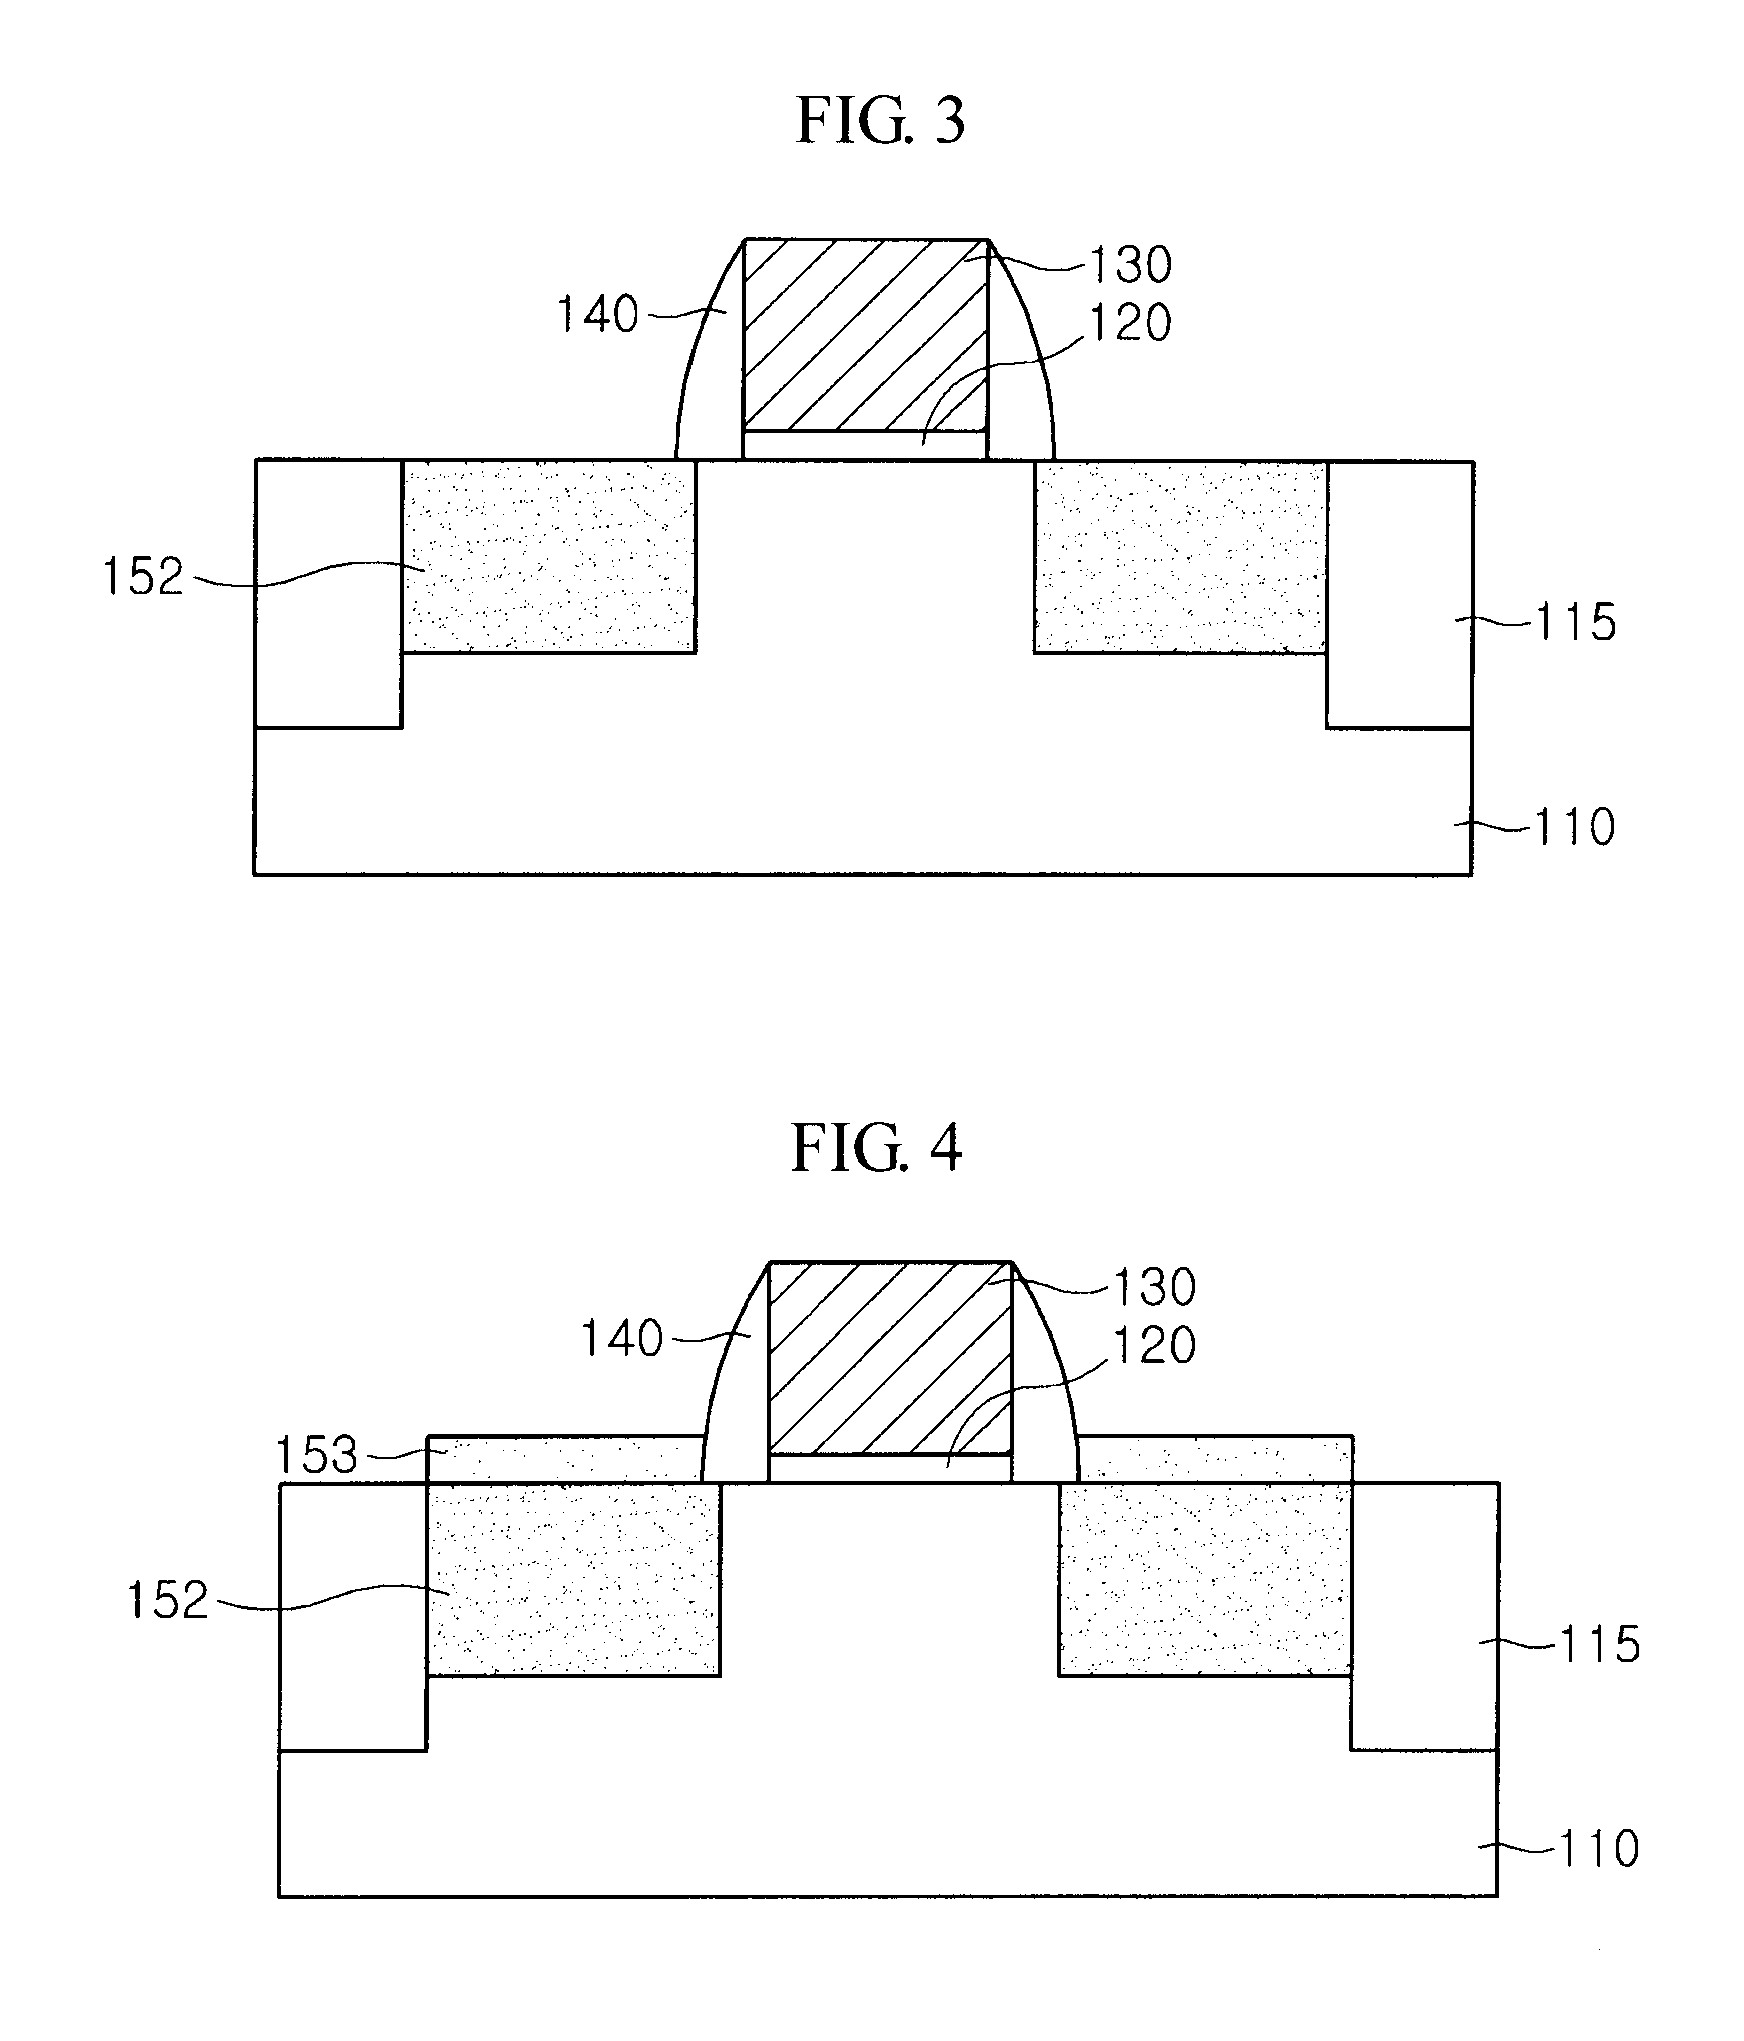 Transistor and method of fabricating the same